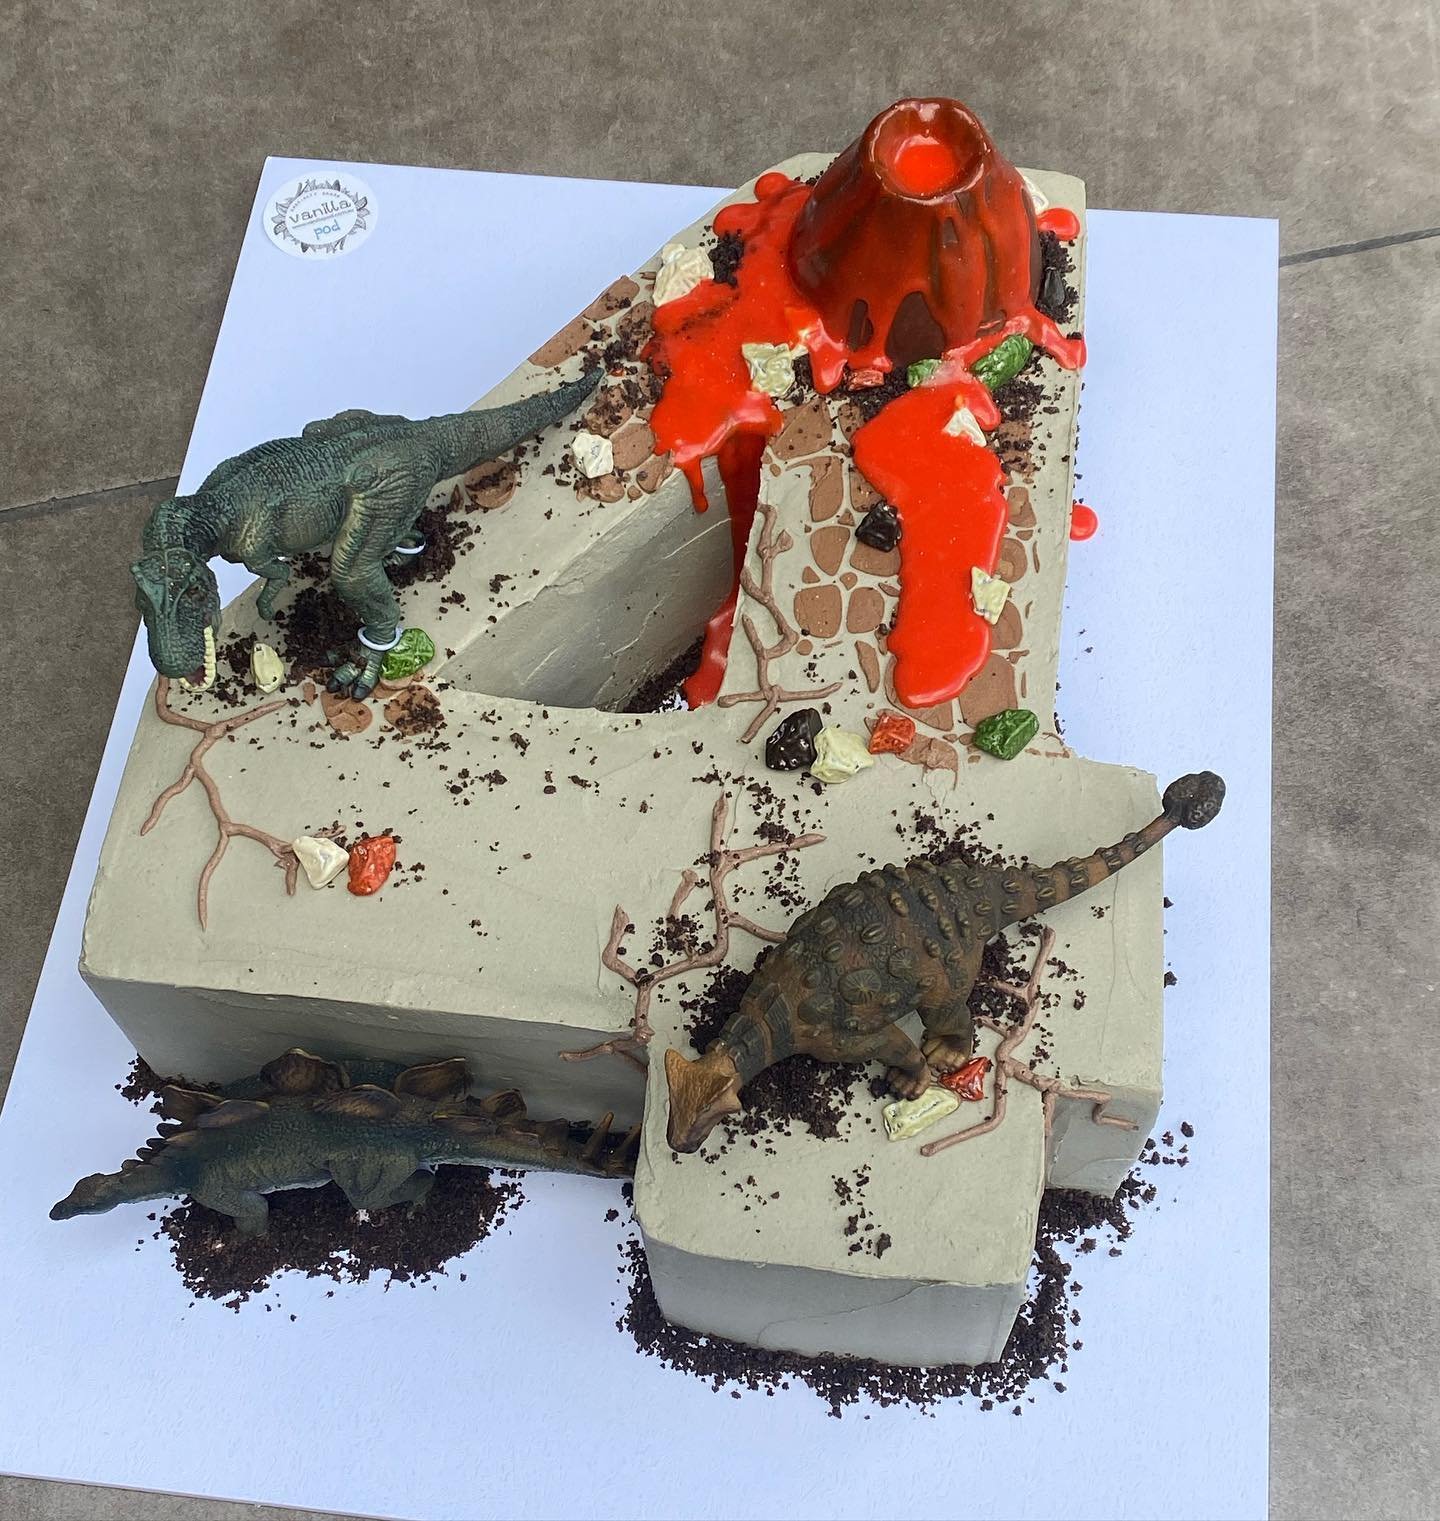 vanillapodspecialtycakes-brisbanecakes-noveltycakes-kidscakes-customcakes-cupcakes-volcanocake-dinosaurcake-numbercake.jpg